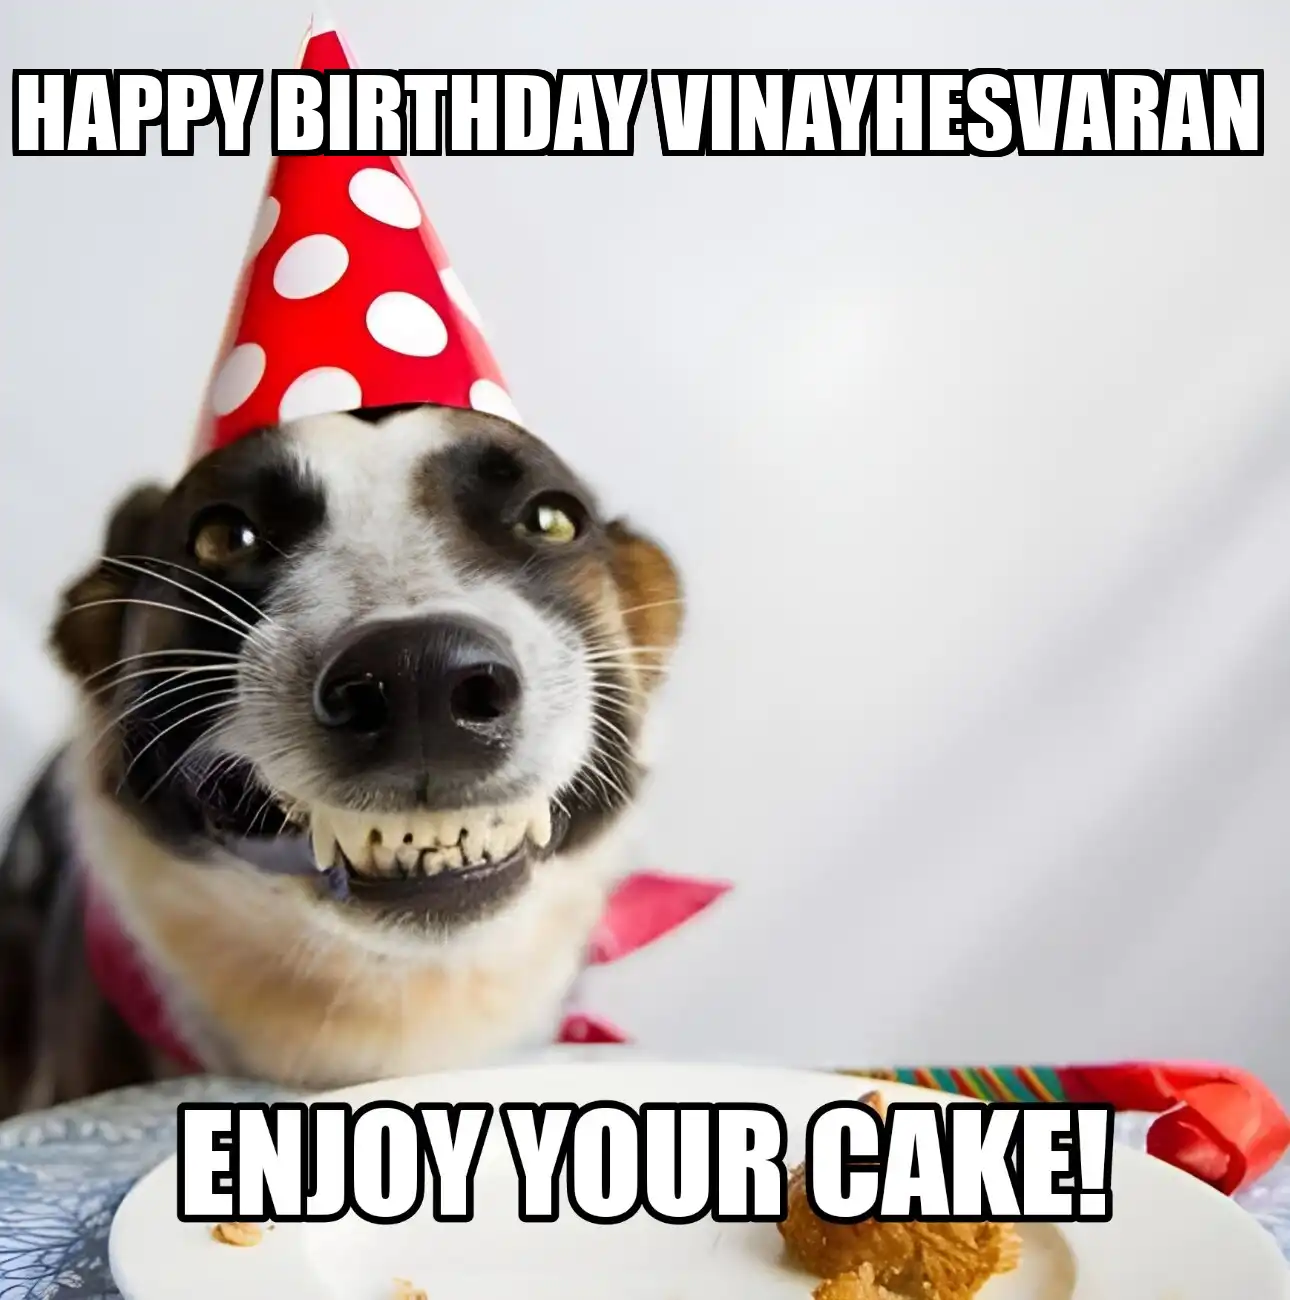 Happy Birthday Vinayhesvaran Enjoy Your Cake Dog Meme